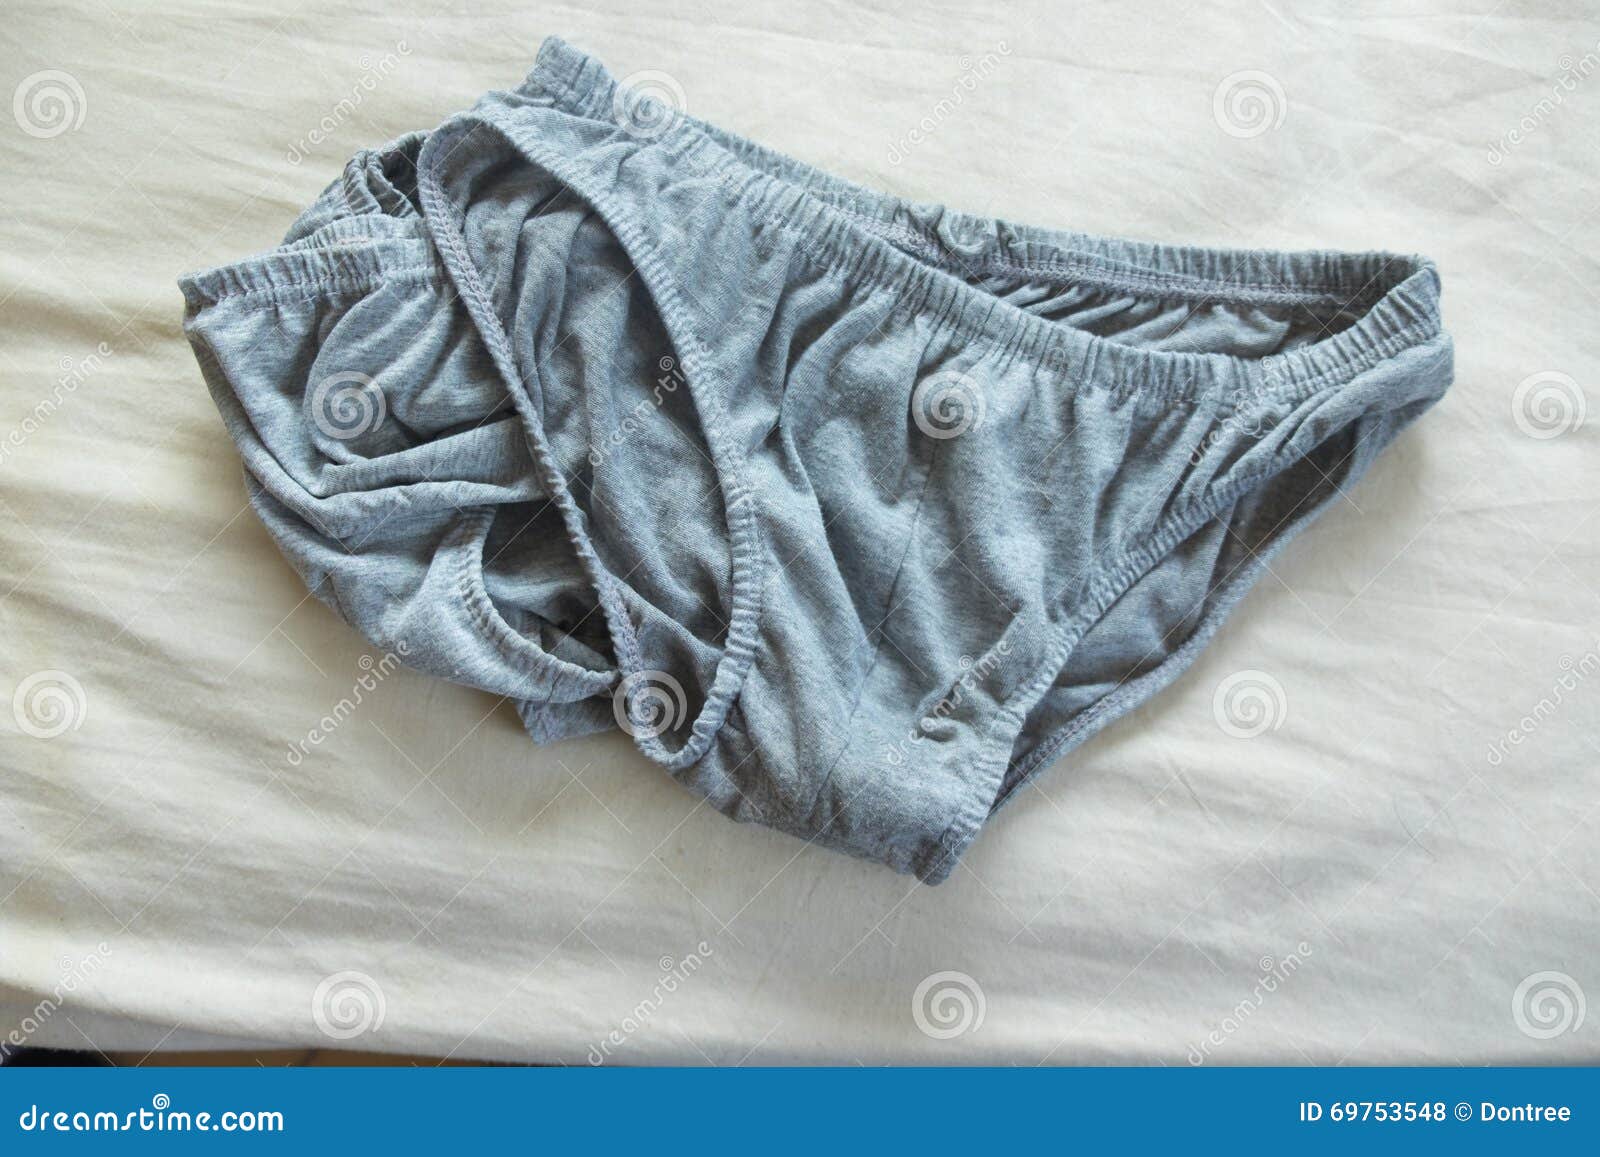 Male Underpants or Underware Bikini Stock Photo - Image of dirty, fiber ...